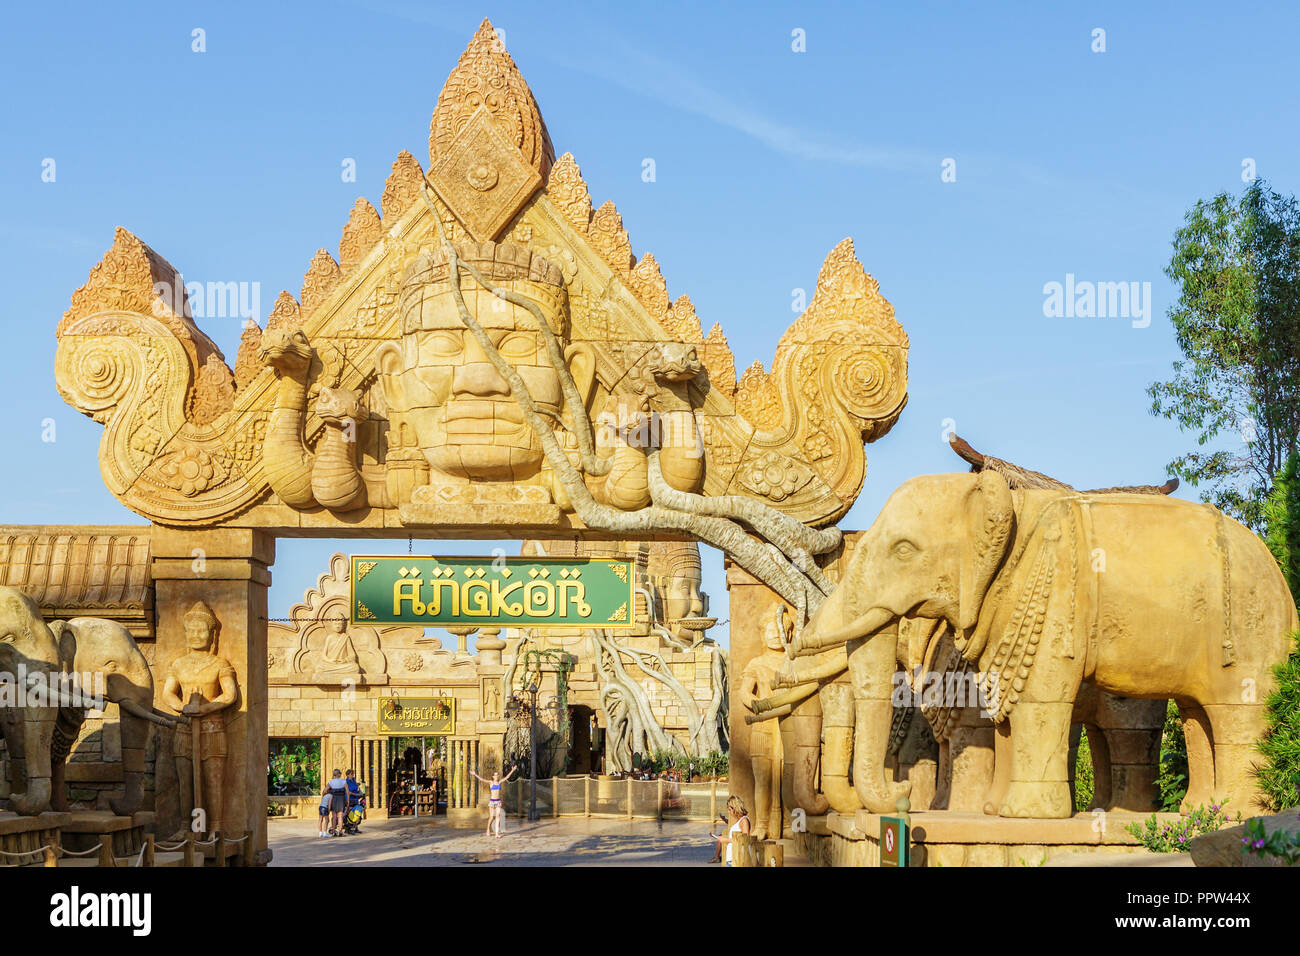 SALOU (PORTAVENTURA), SPAIN - Jun 16, 2014: Entrance gate to the attraction  Angkor located in the theme park Port Aventura Stock Photo - Alamy